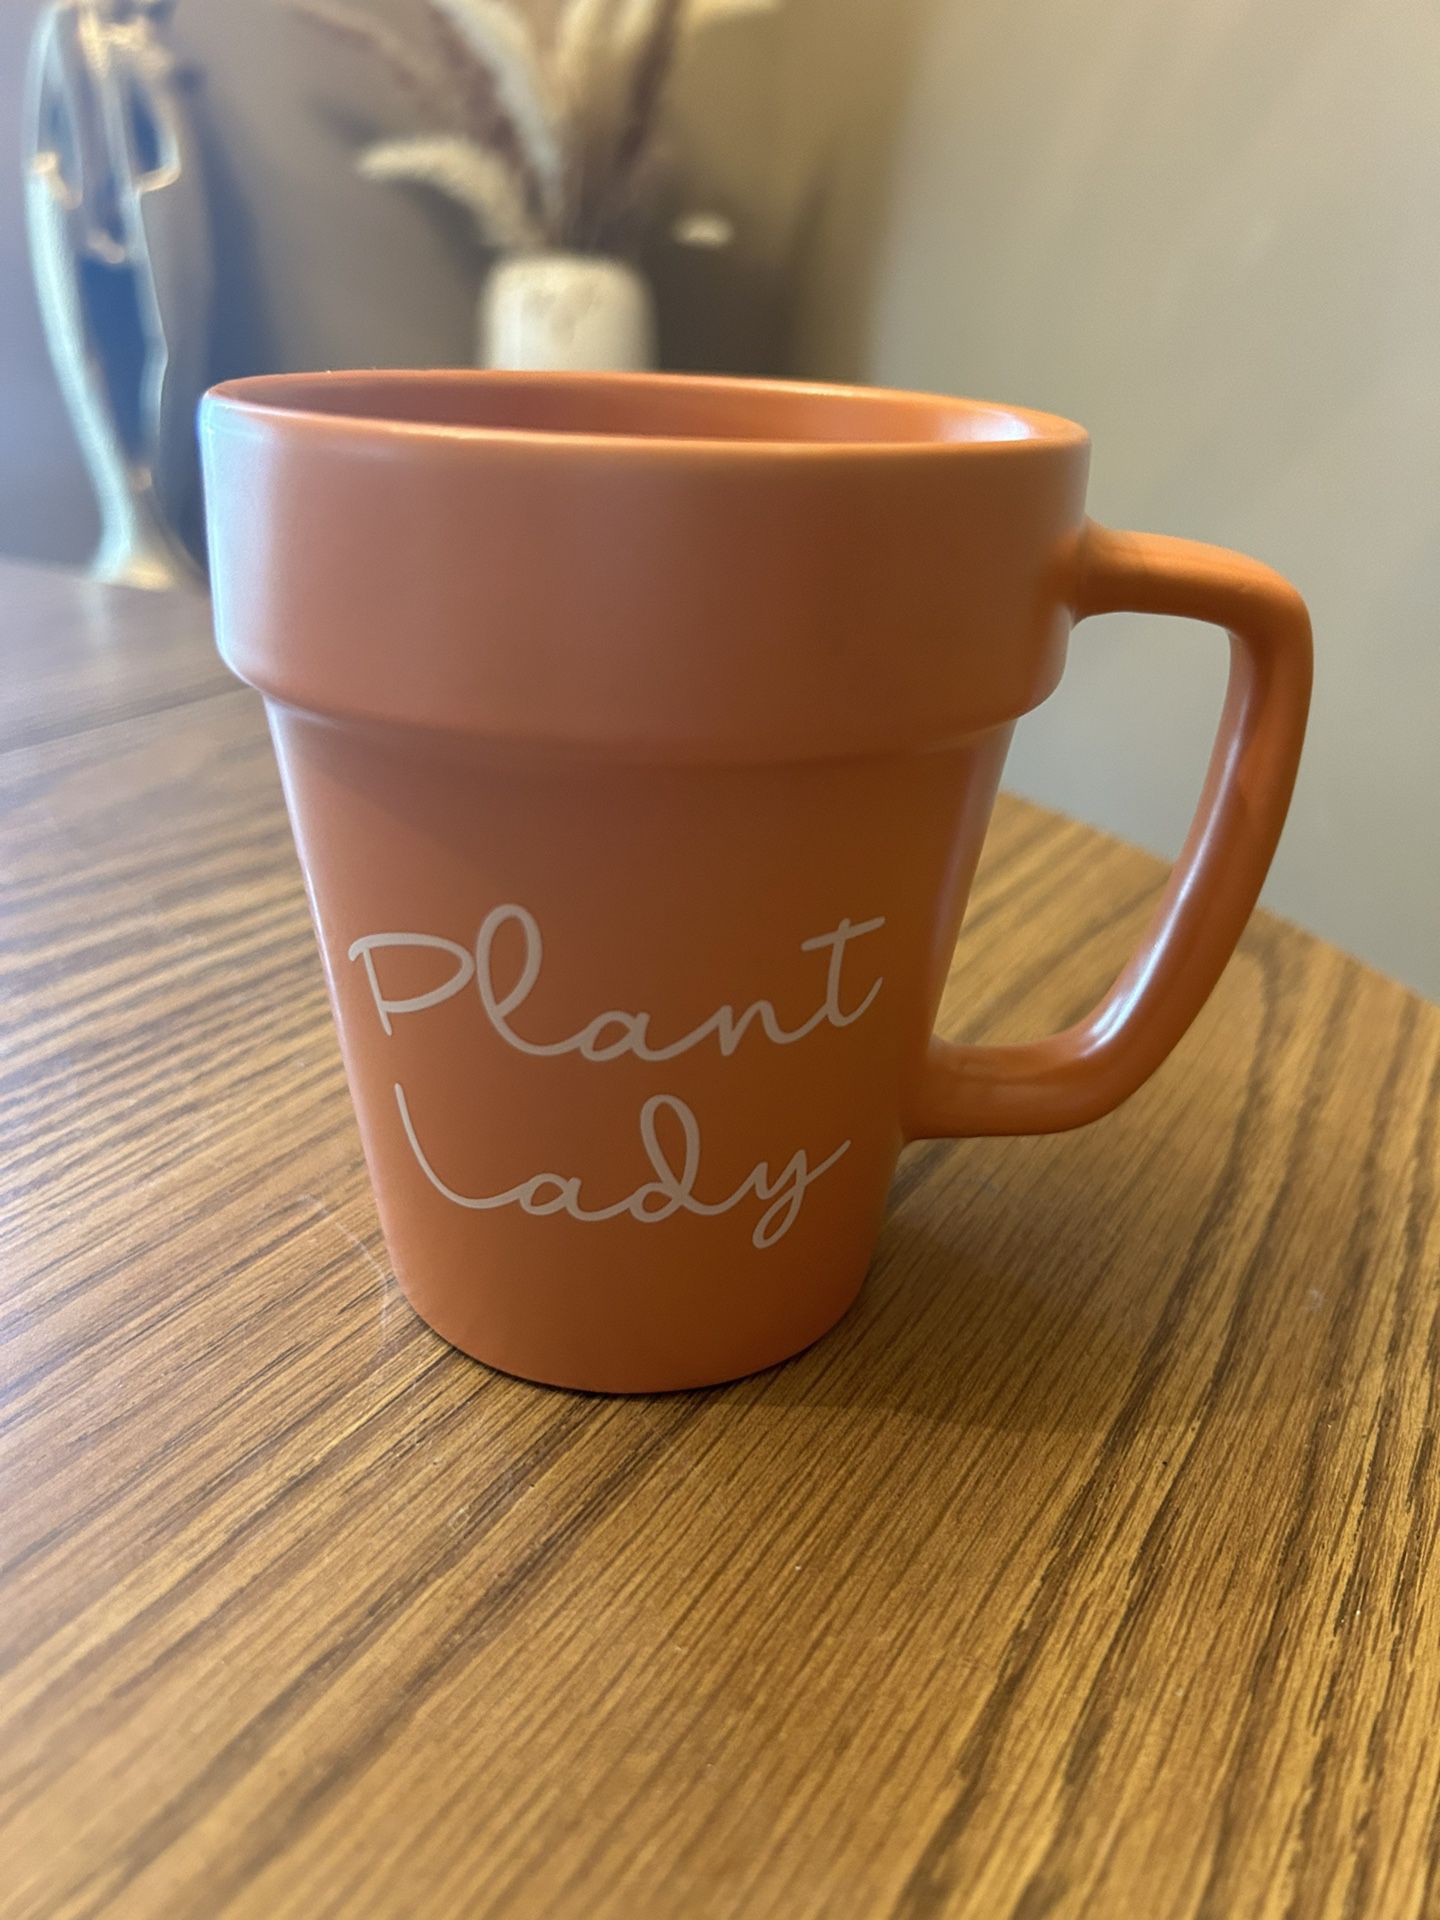 Plant lady coffee mug - flower pot shape